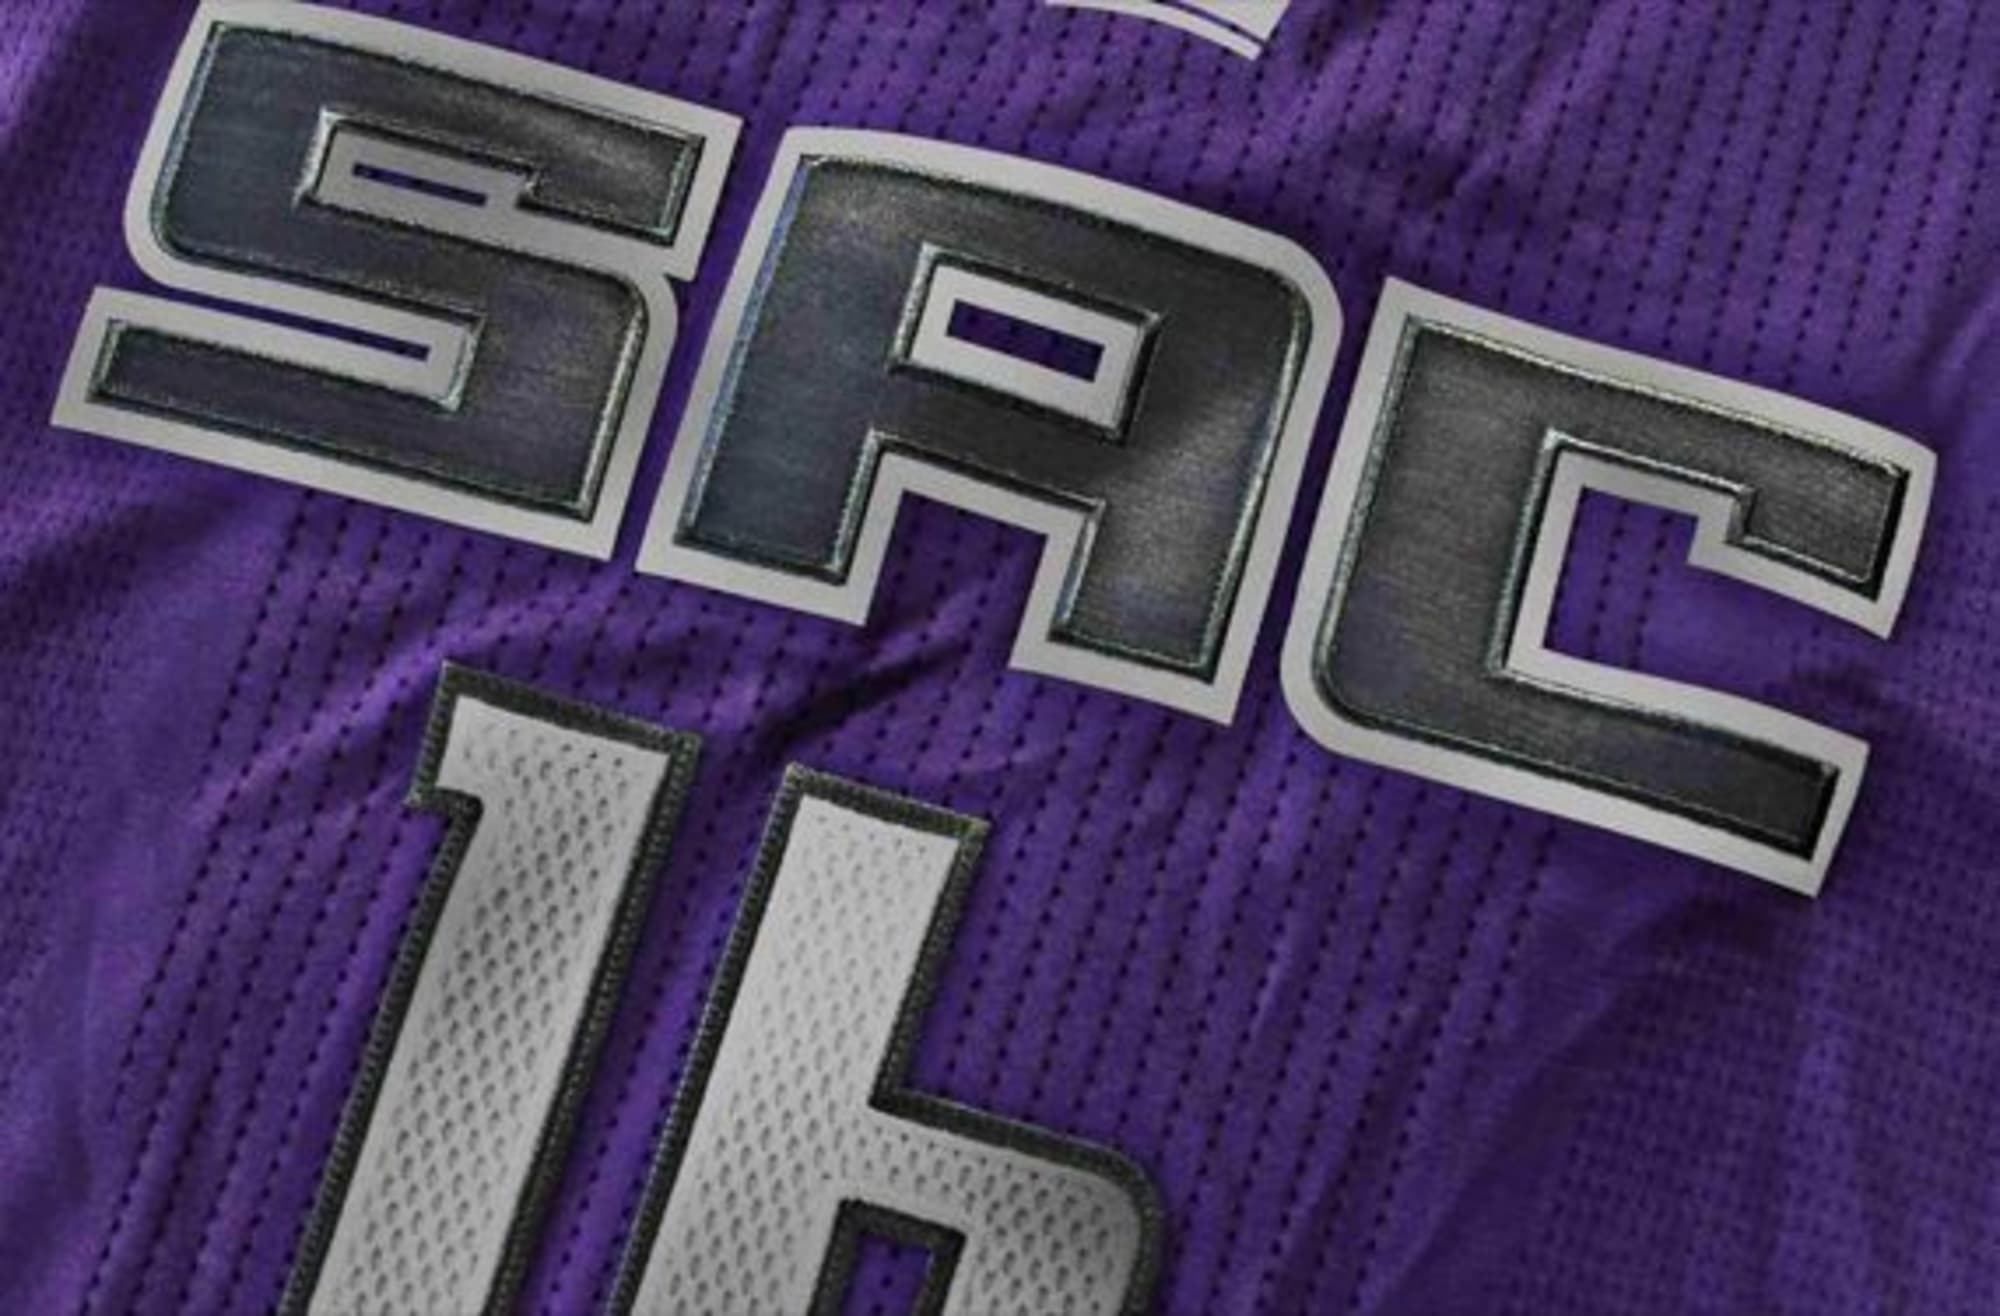 Sacramento Kings Unveil New Uniforms For 2023-24 Season